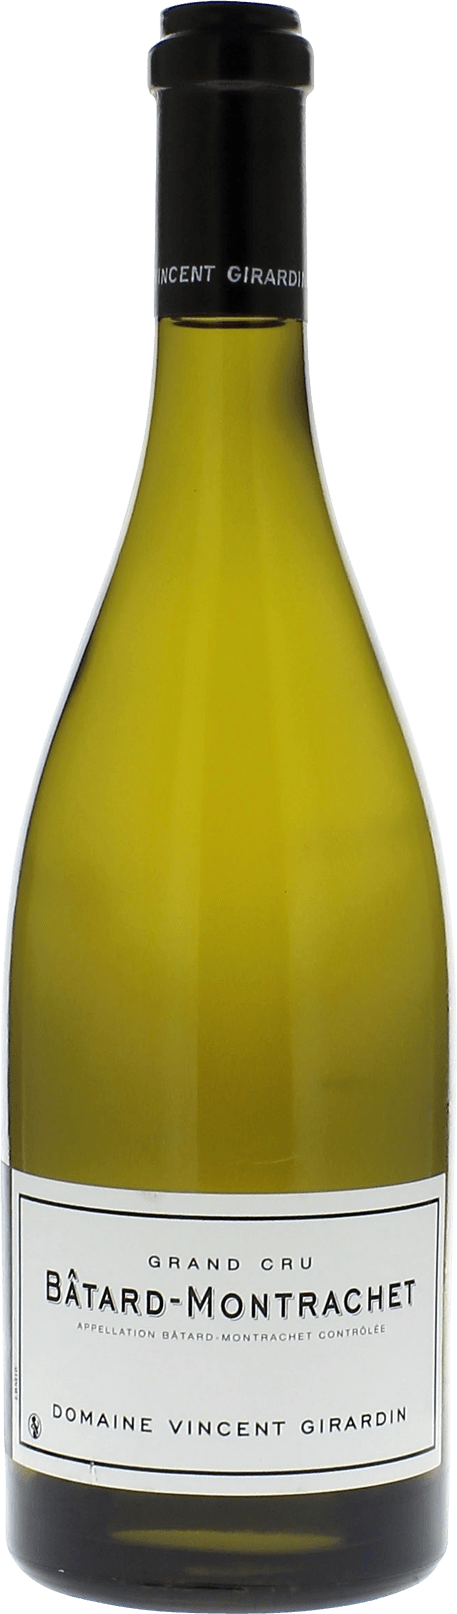 Batard montrachet grand cru 2015 Domaine GIRARDIN Vincent, Bourgogne blanc